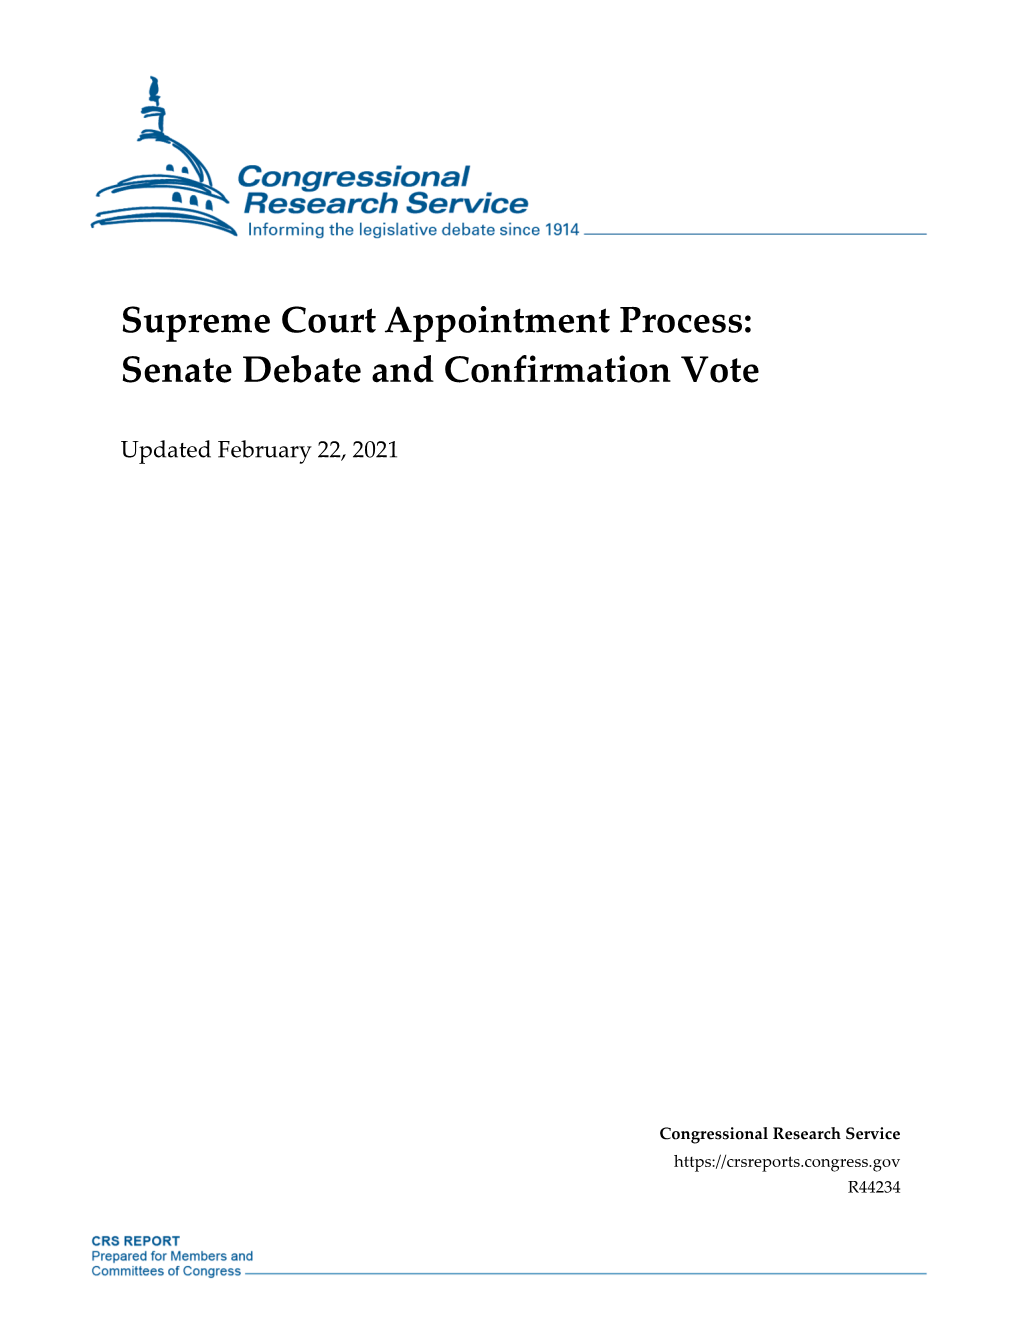 Supreme Court Appointment Process: Senate Debate and Confirmation Vote